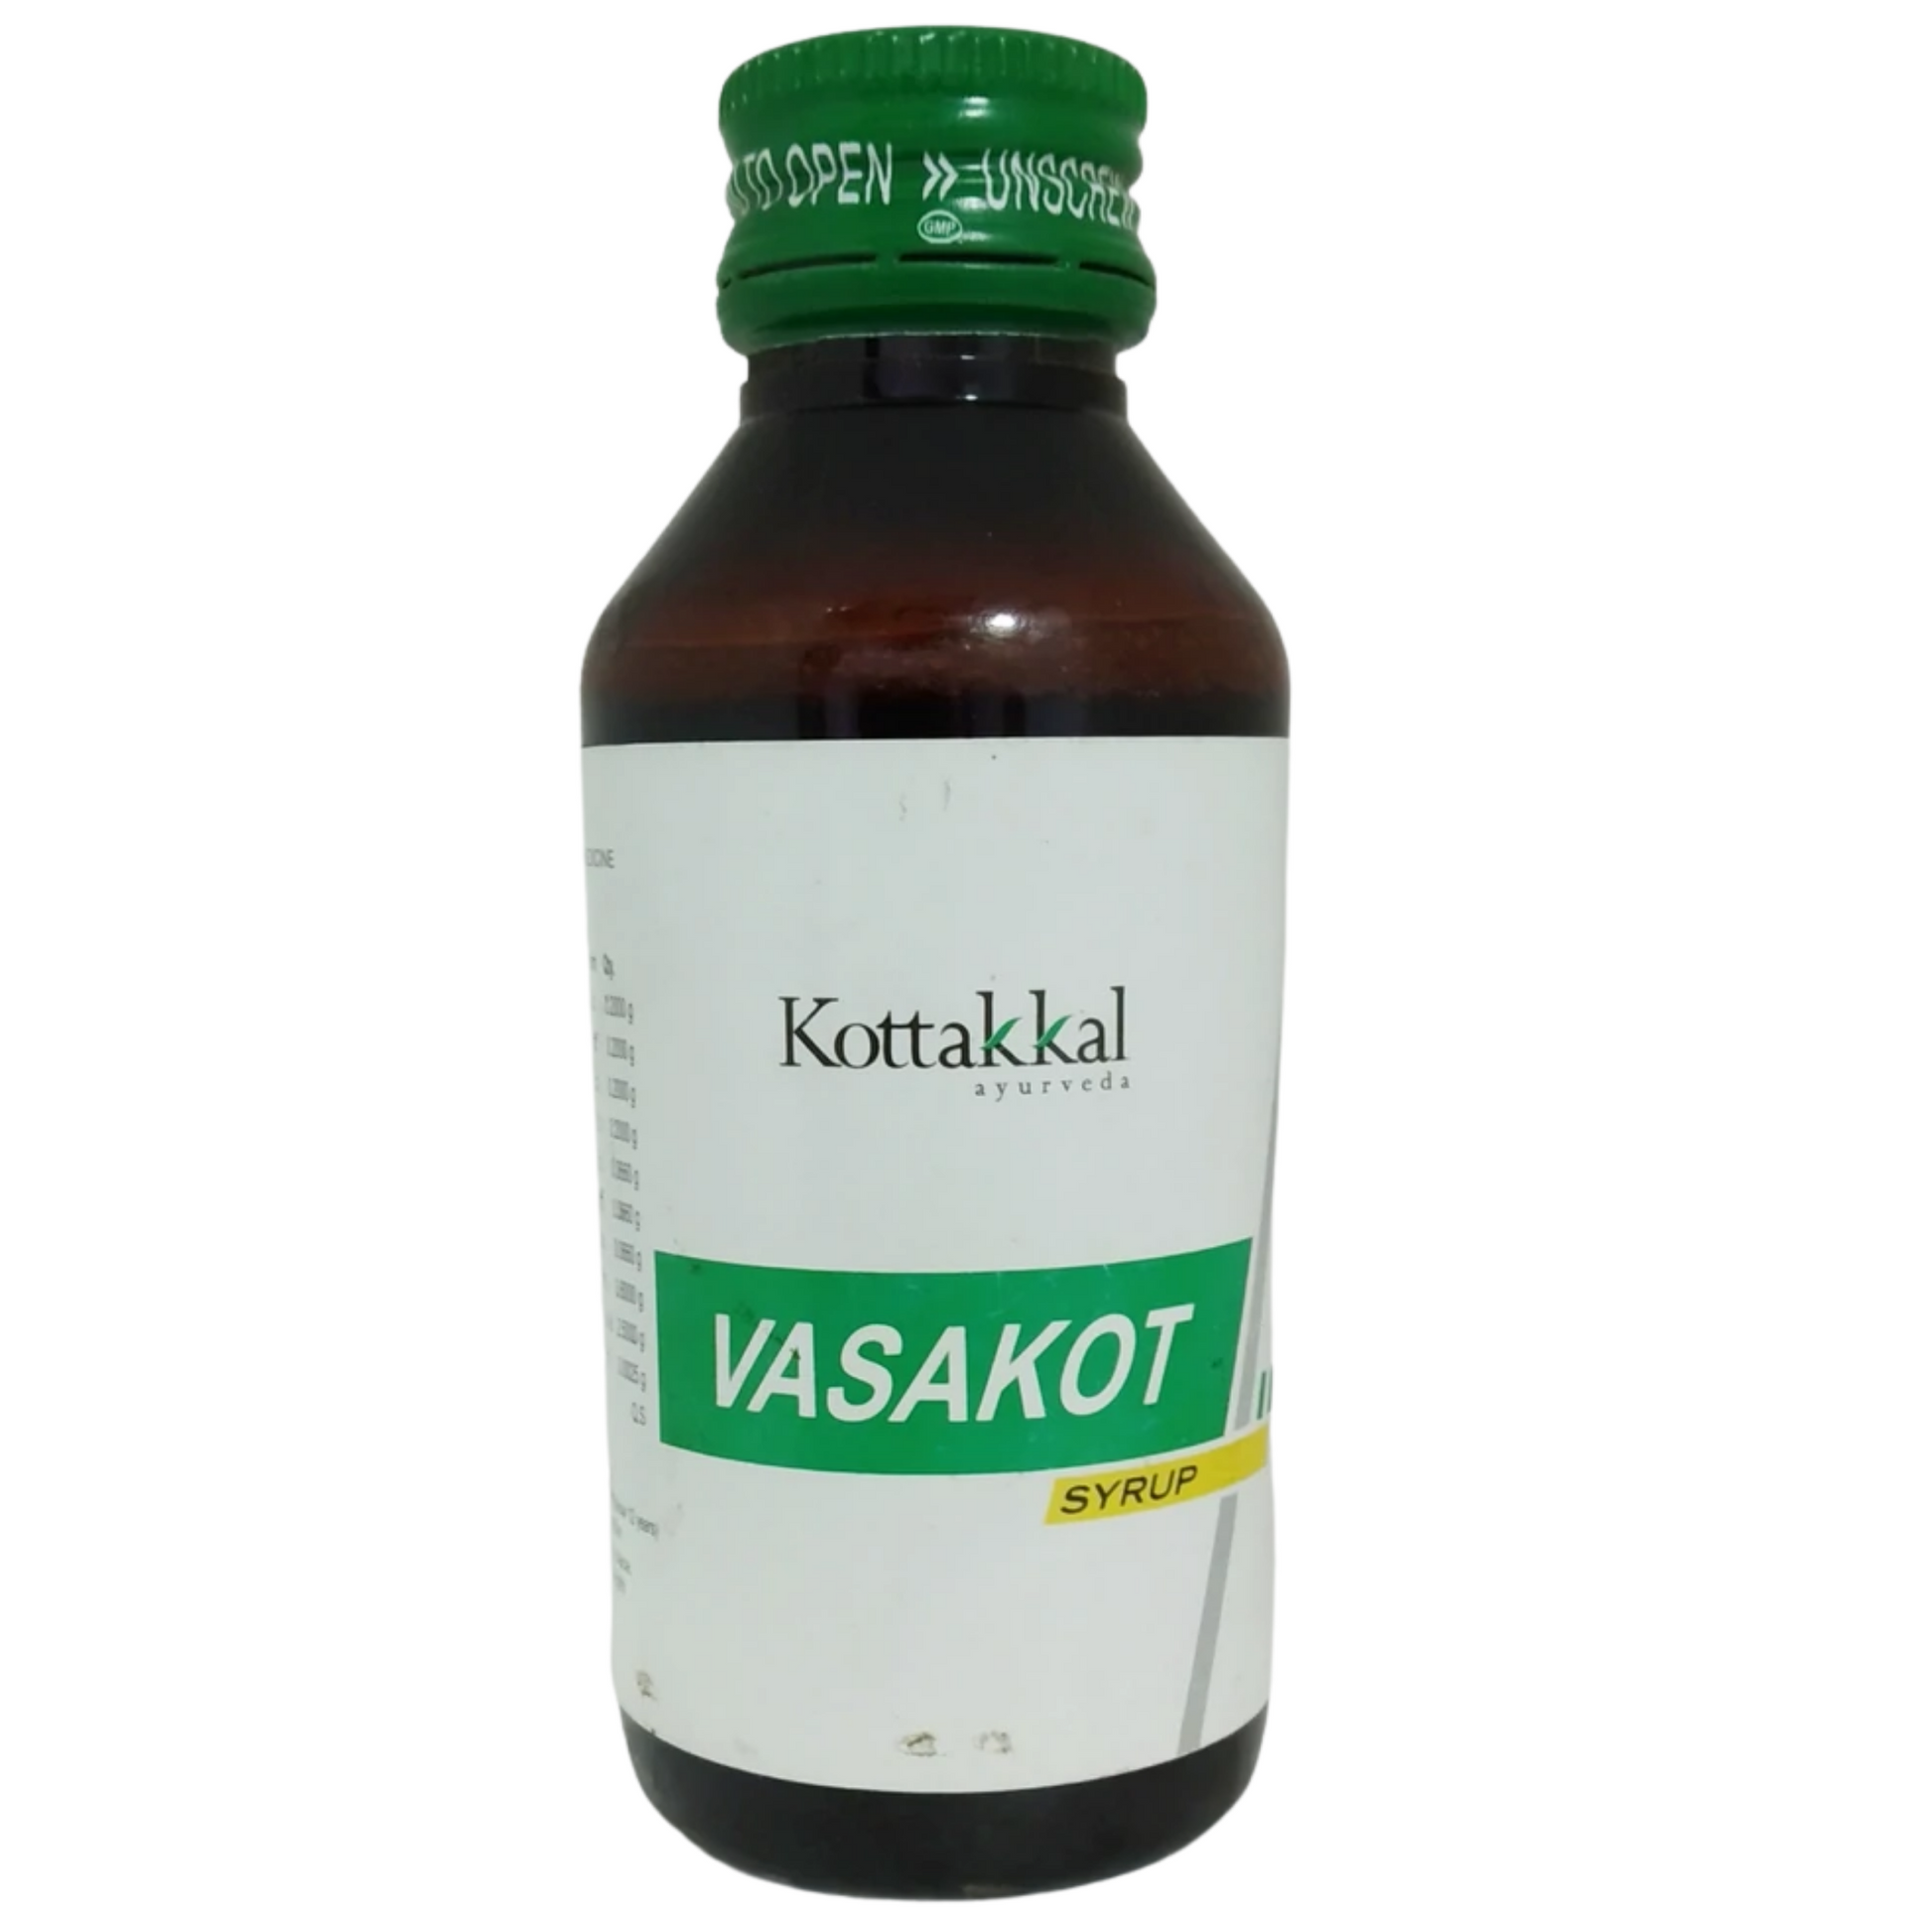 Shop Kottakkal Vasakot Syrup 100ml at price 70.00 from Kottakkal Online - Ayush Care